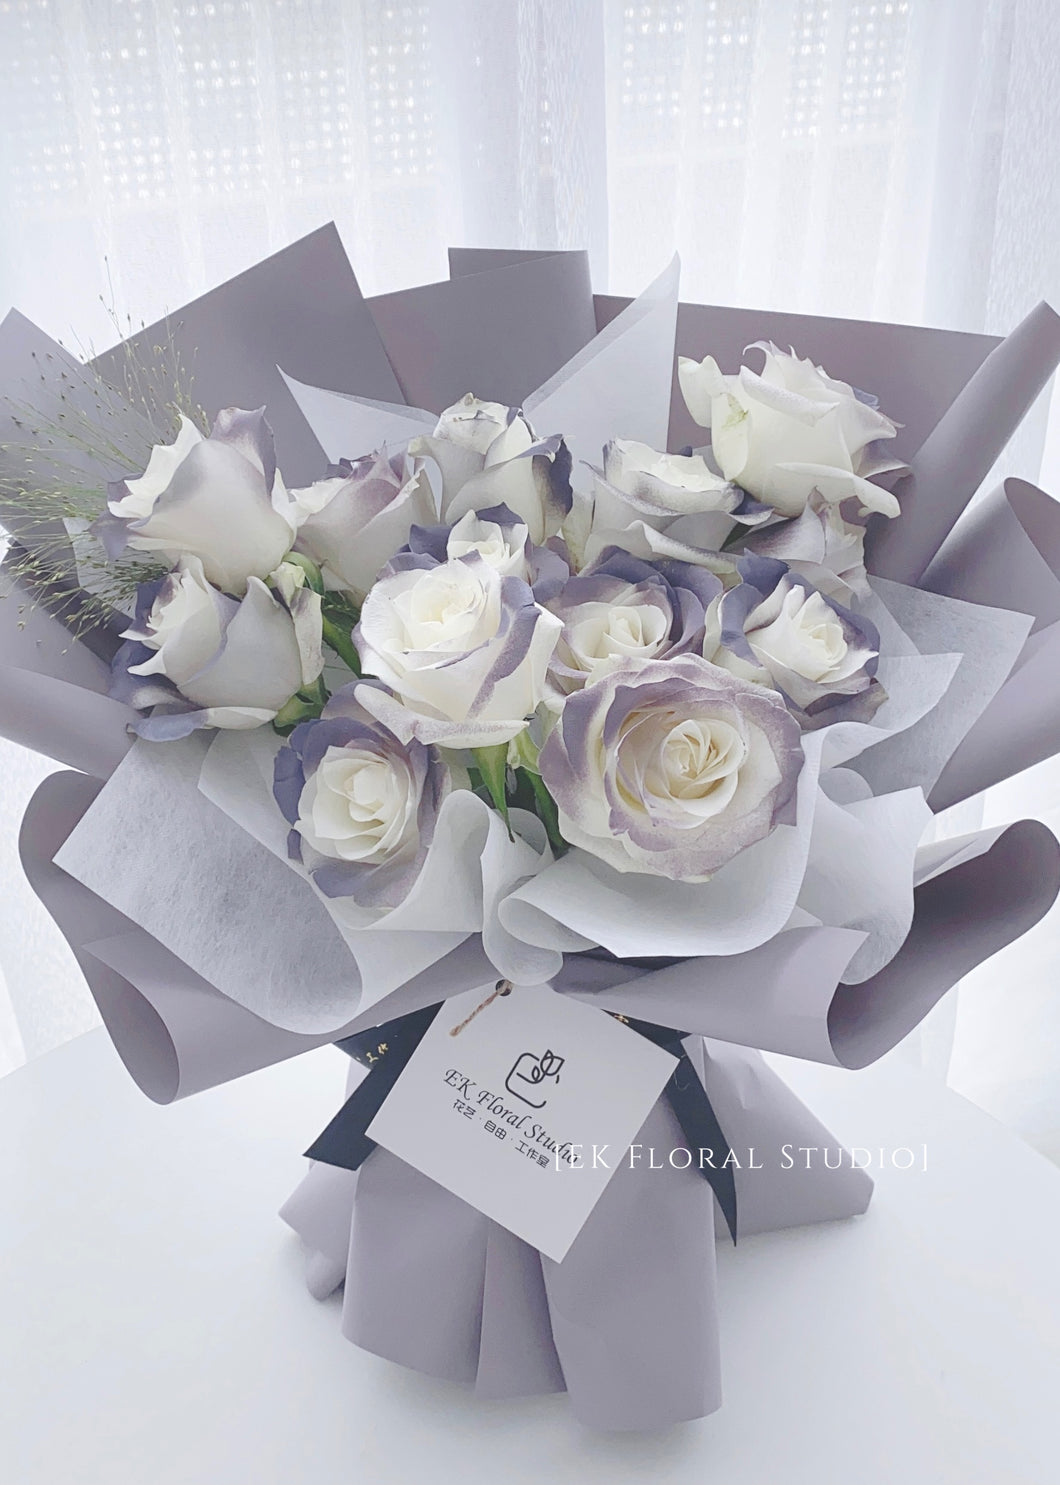 Light Purple Fresh Rose Bouquet 卡普里灰紫鲜花玫瑰花束 Ek Floral Studio